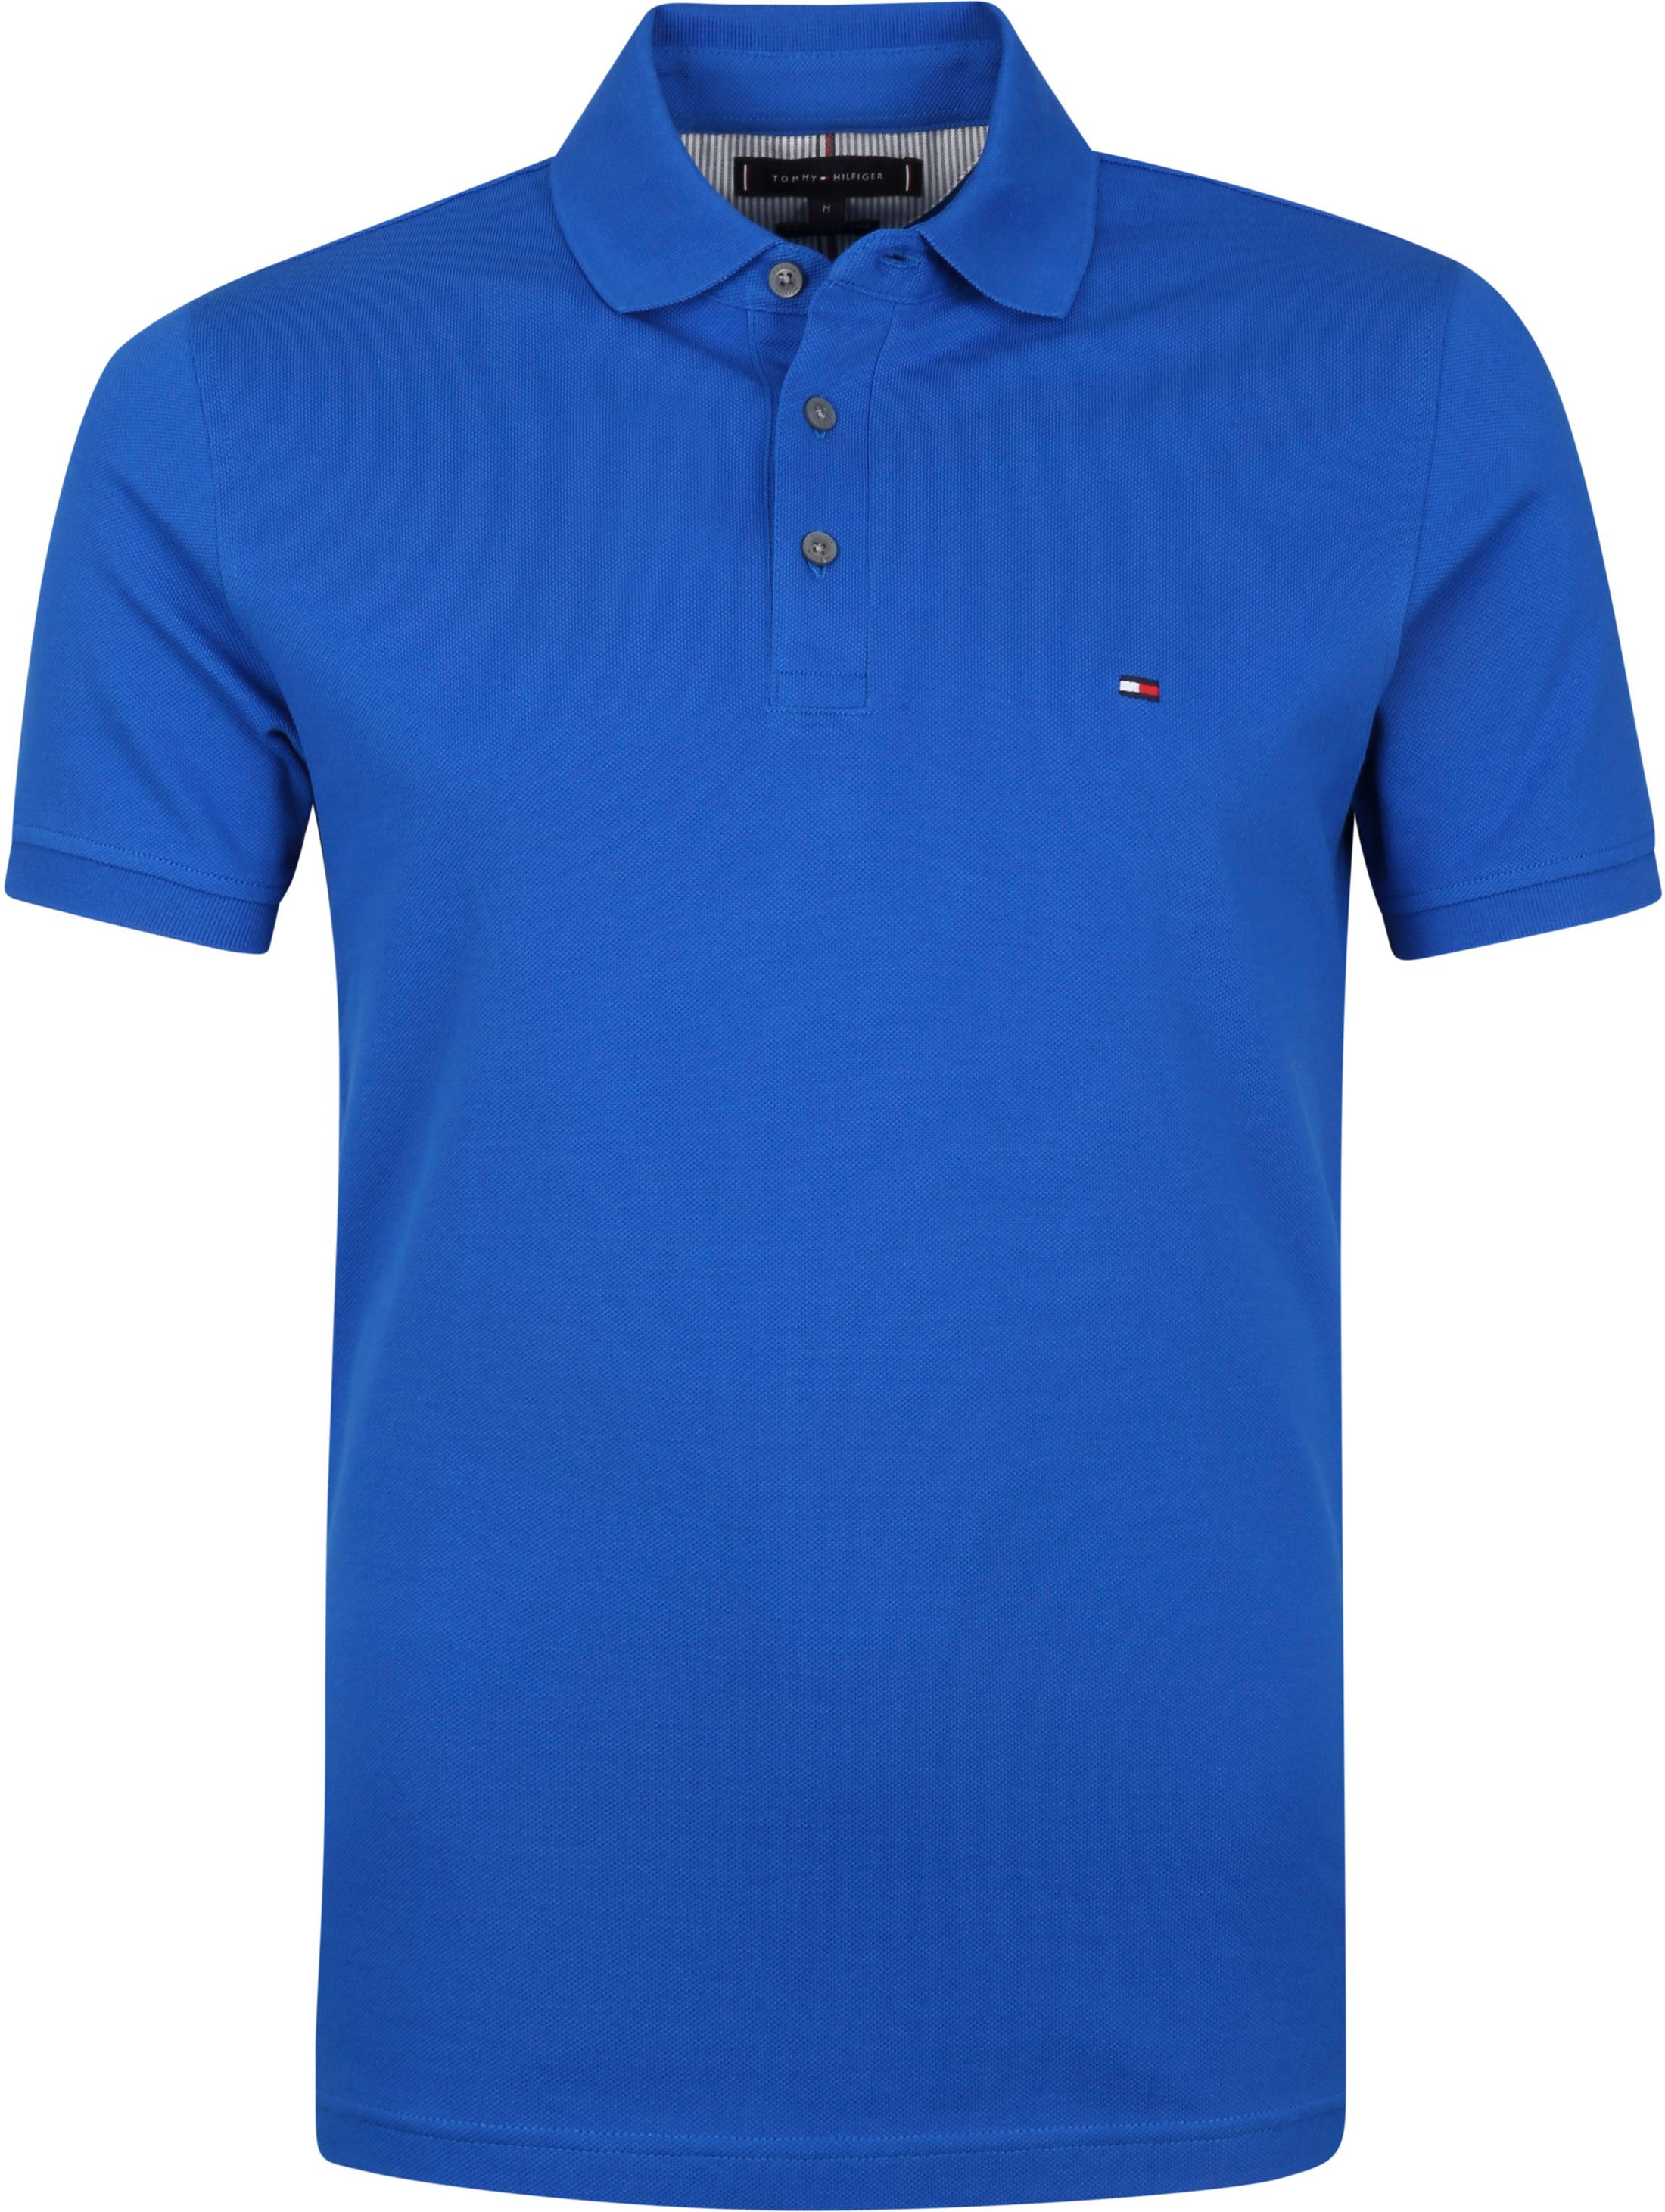 Tommy Hilfiger 1985 Polo Shirt Cobalt Blue Dark Blue size L